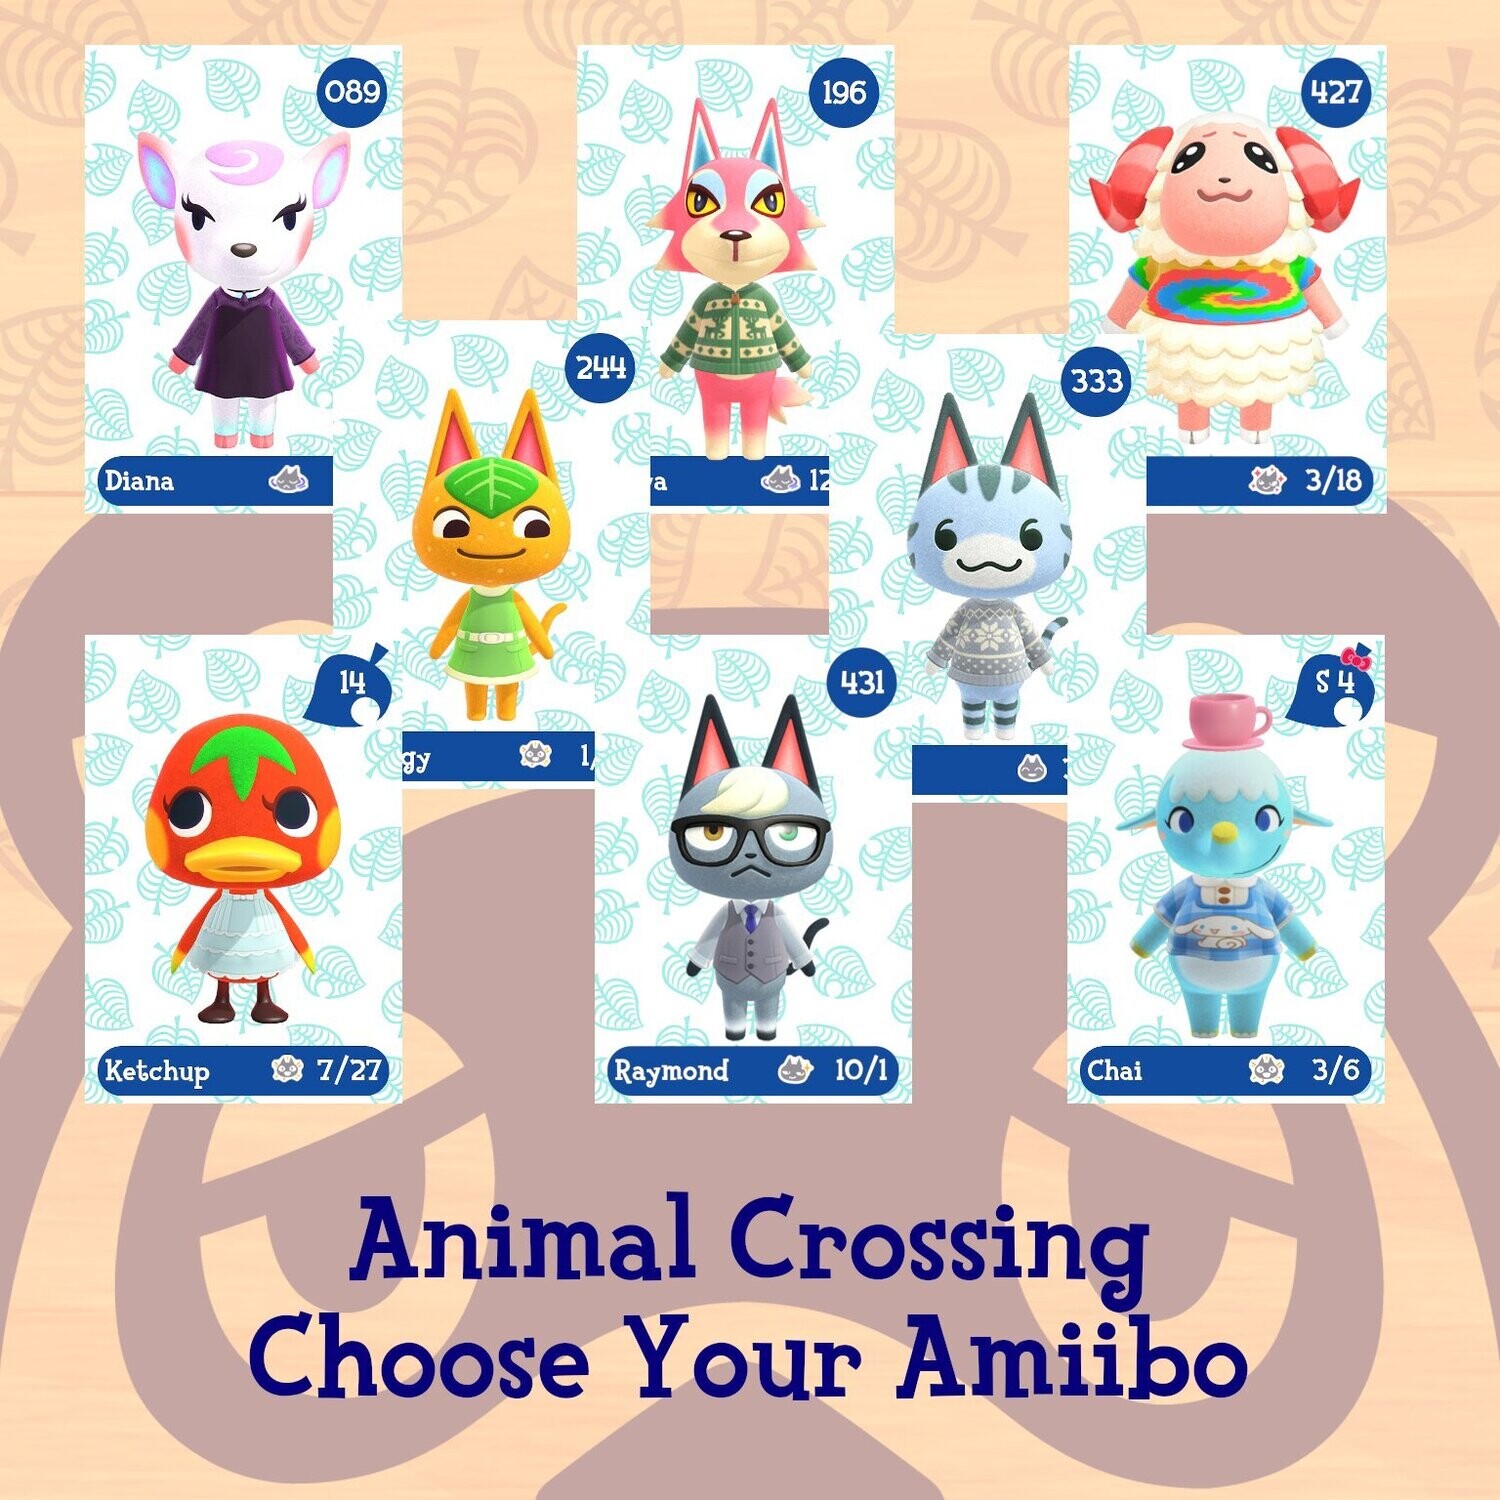 How amiibo and amiibo cards work in Animal Crossing: New Horizons